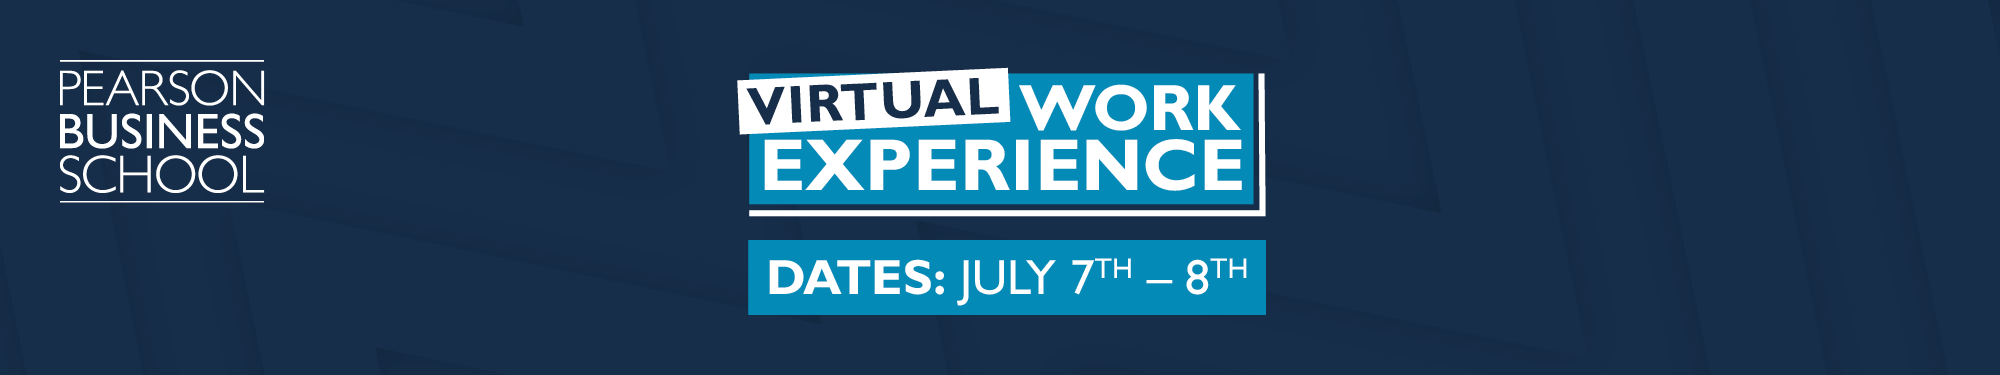 Virtual Work Experience header image